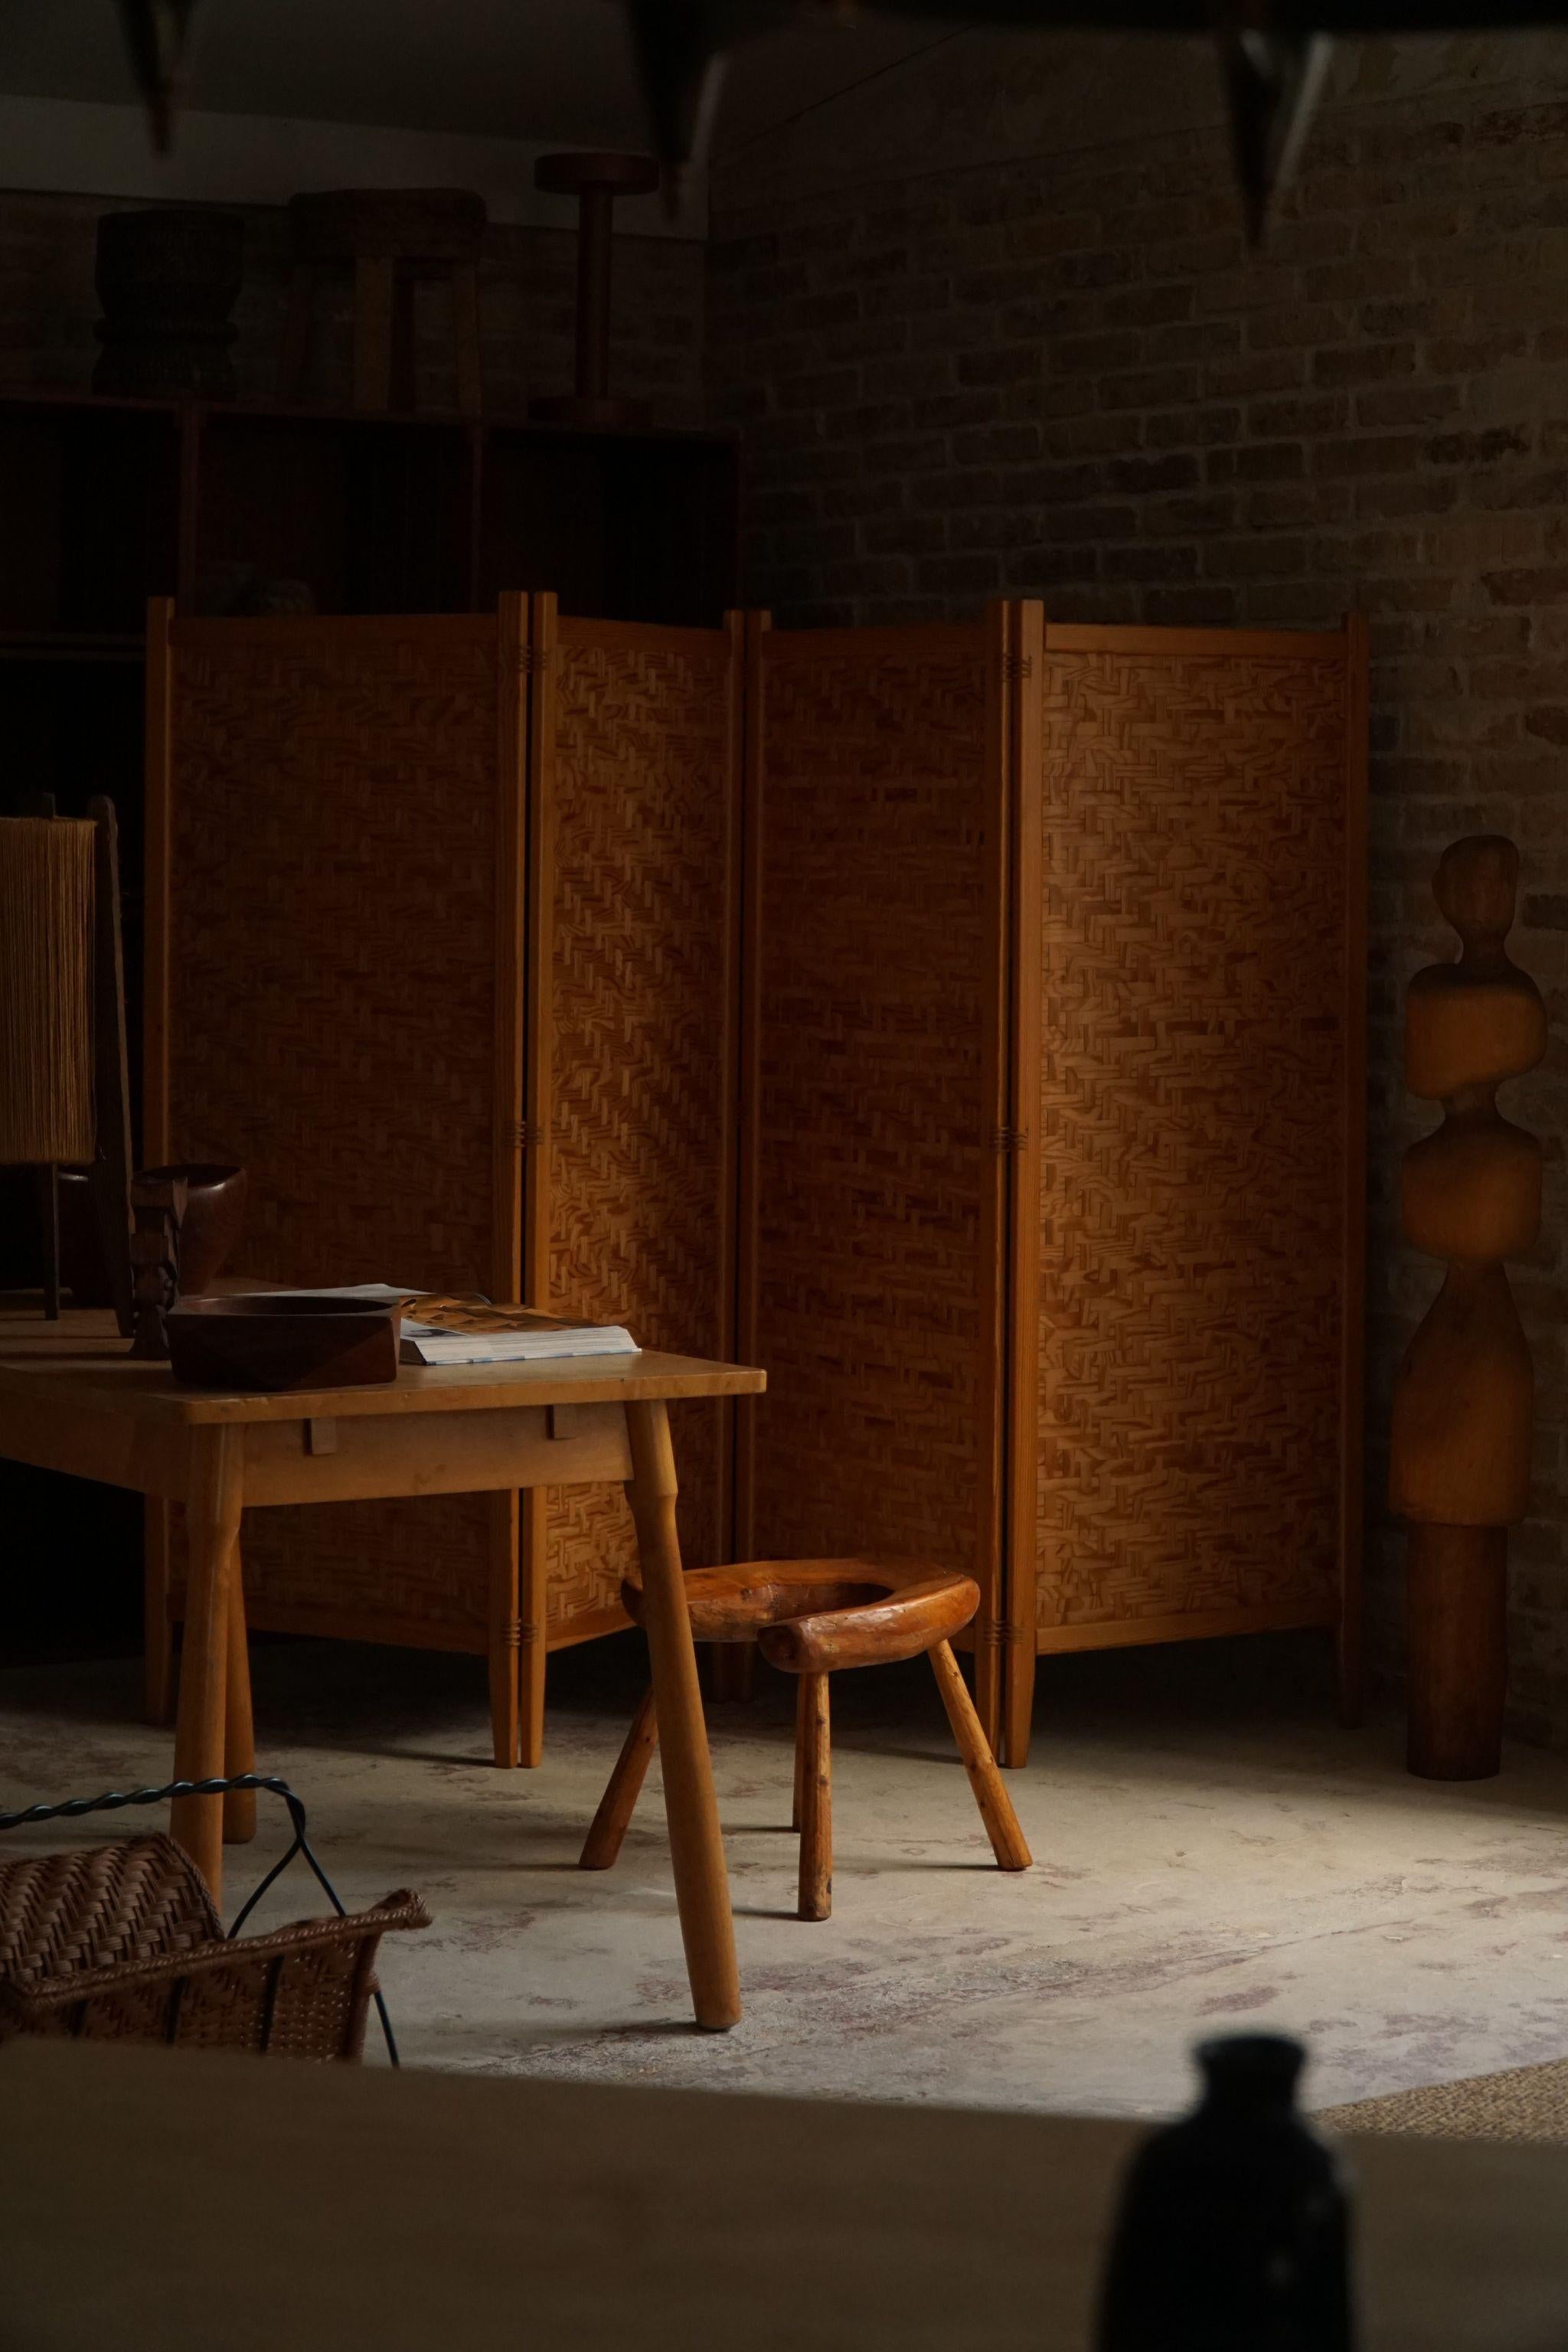 20th Century Alberts Tibro, Room Divider in Pine & Leather, Swedish Mid Century Modern, 1960s